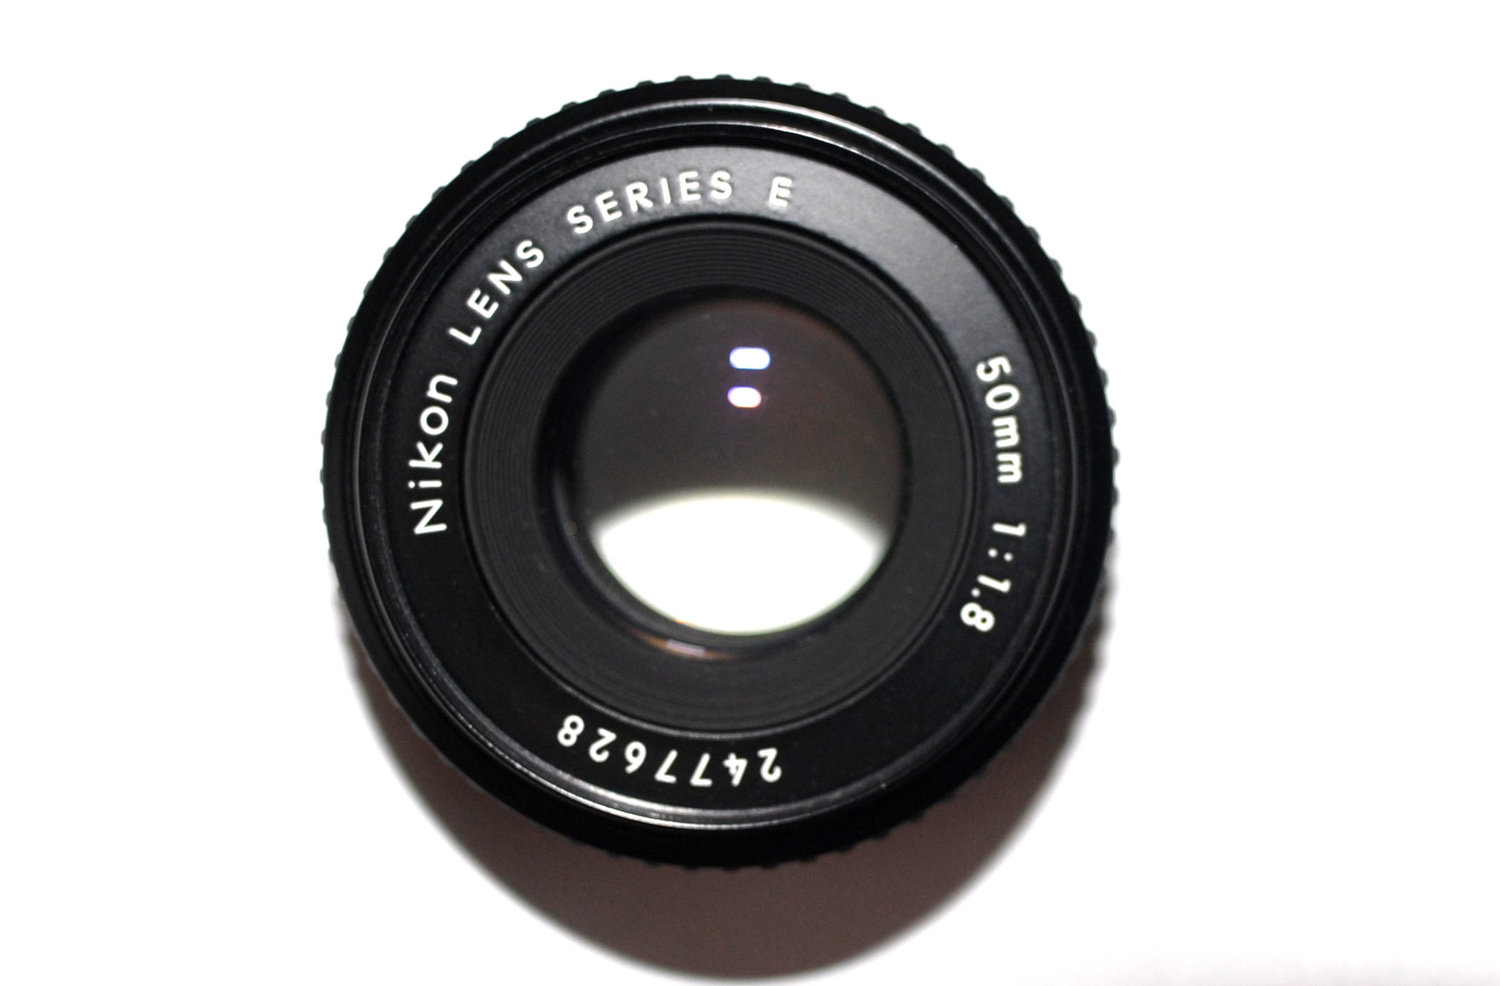 Nikon 50mm f1.8 E Series-3913